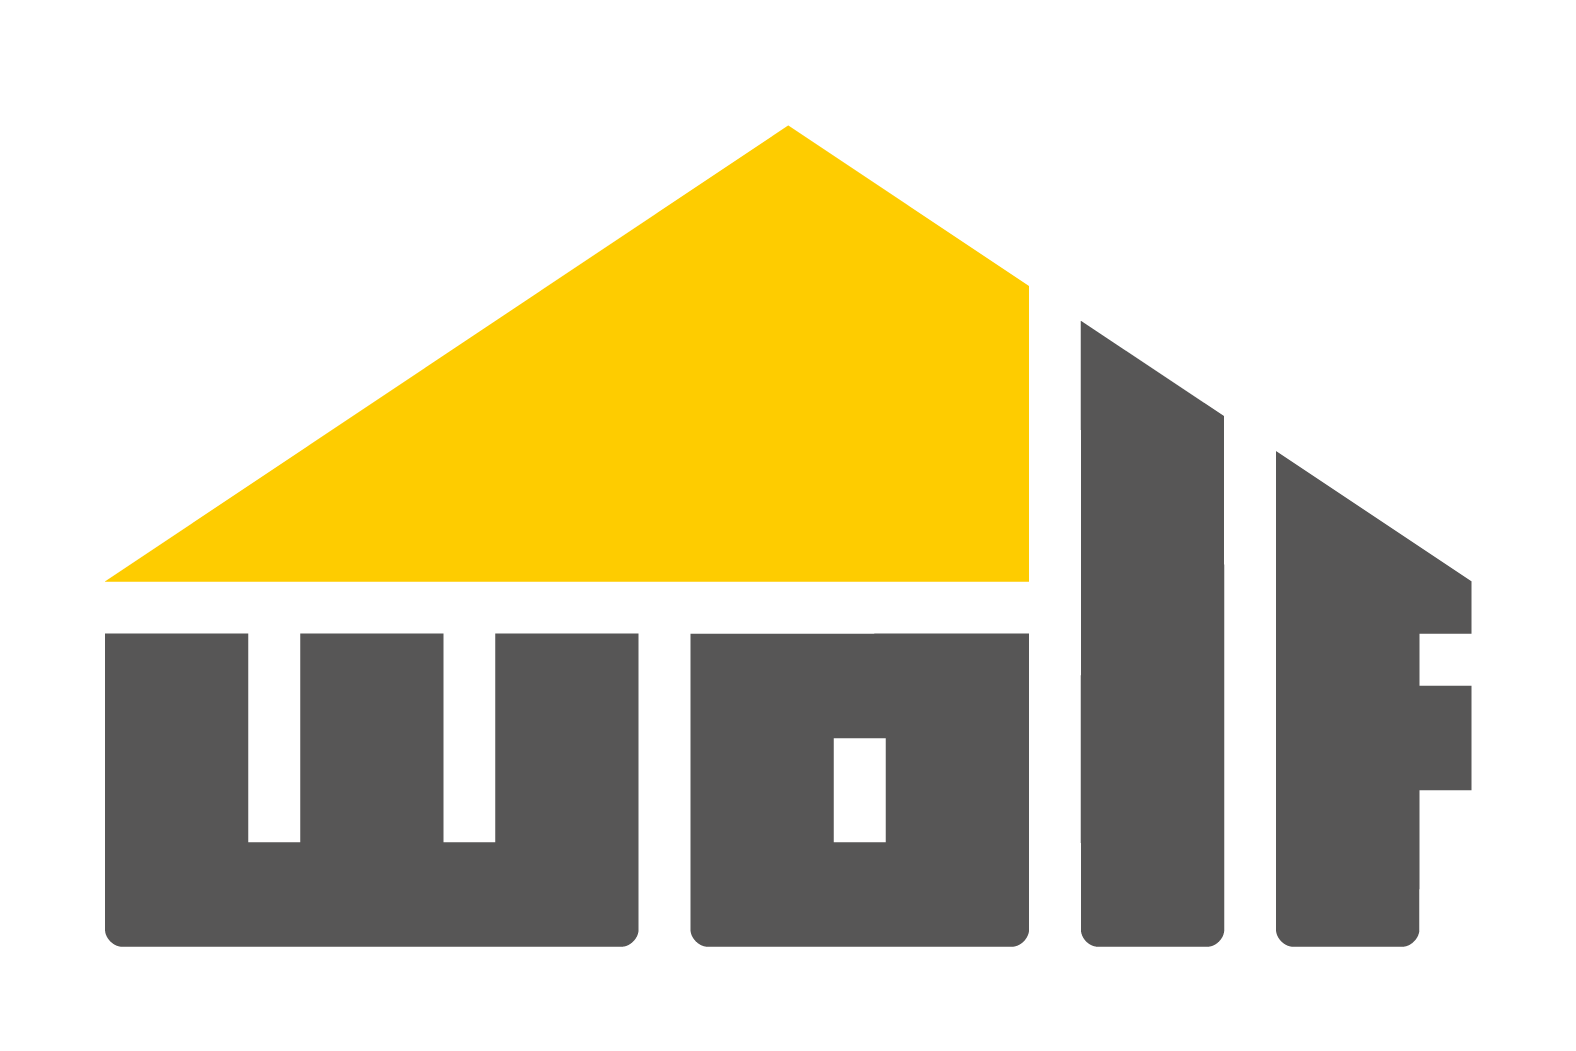 Wolf System Logo